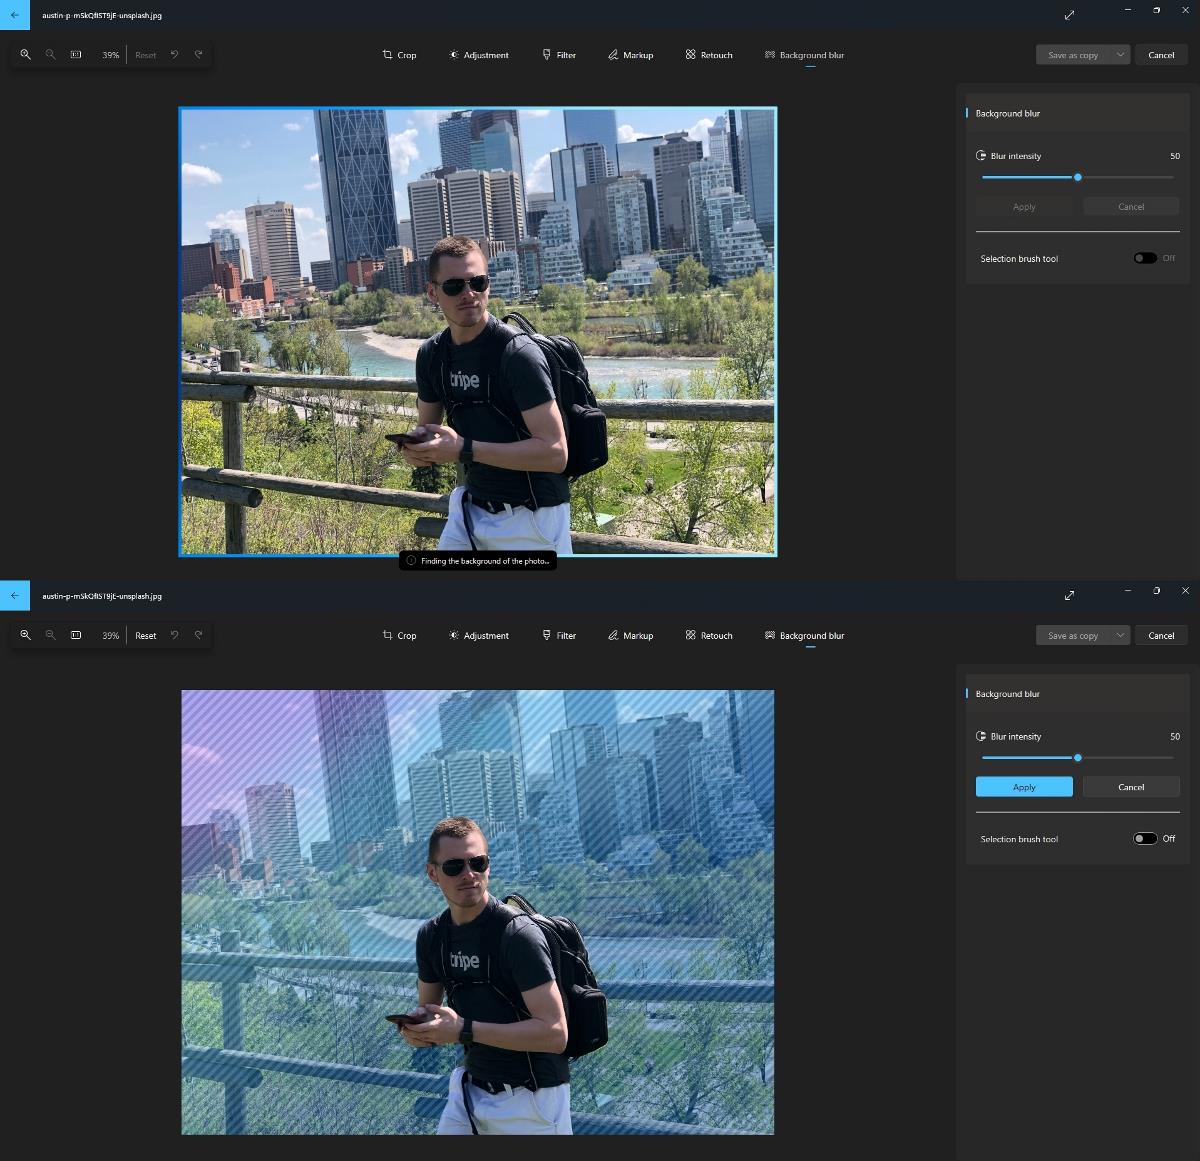 Microsoft Photos app processes background blur